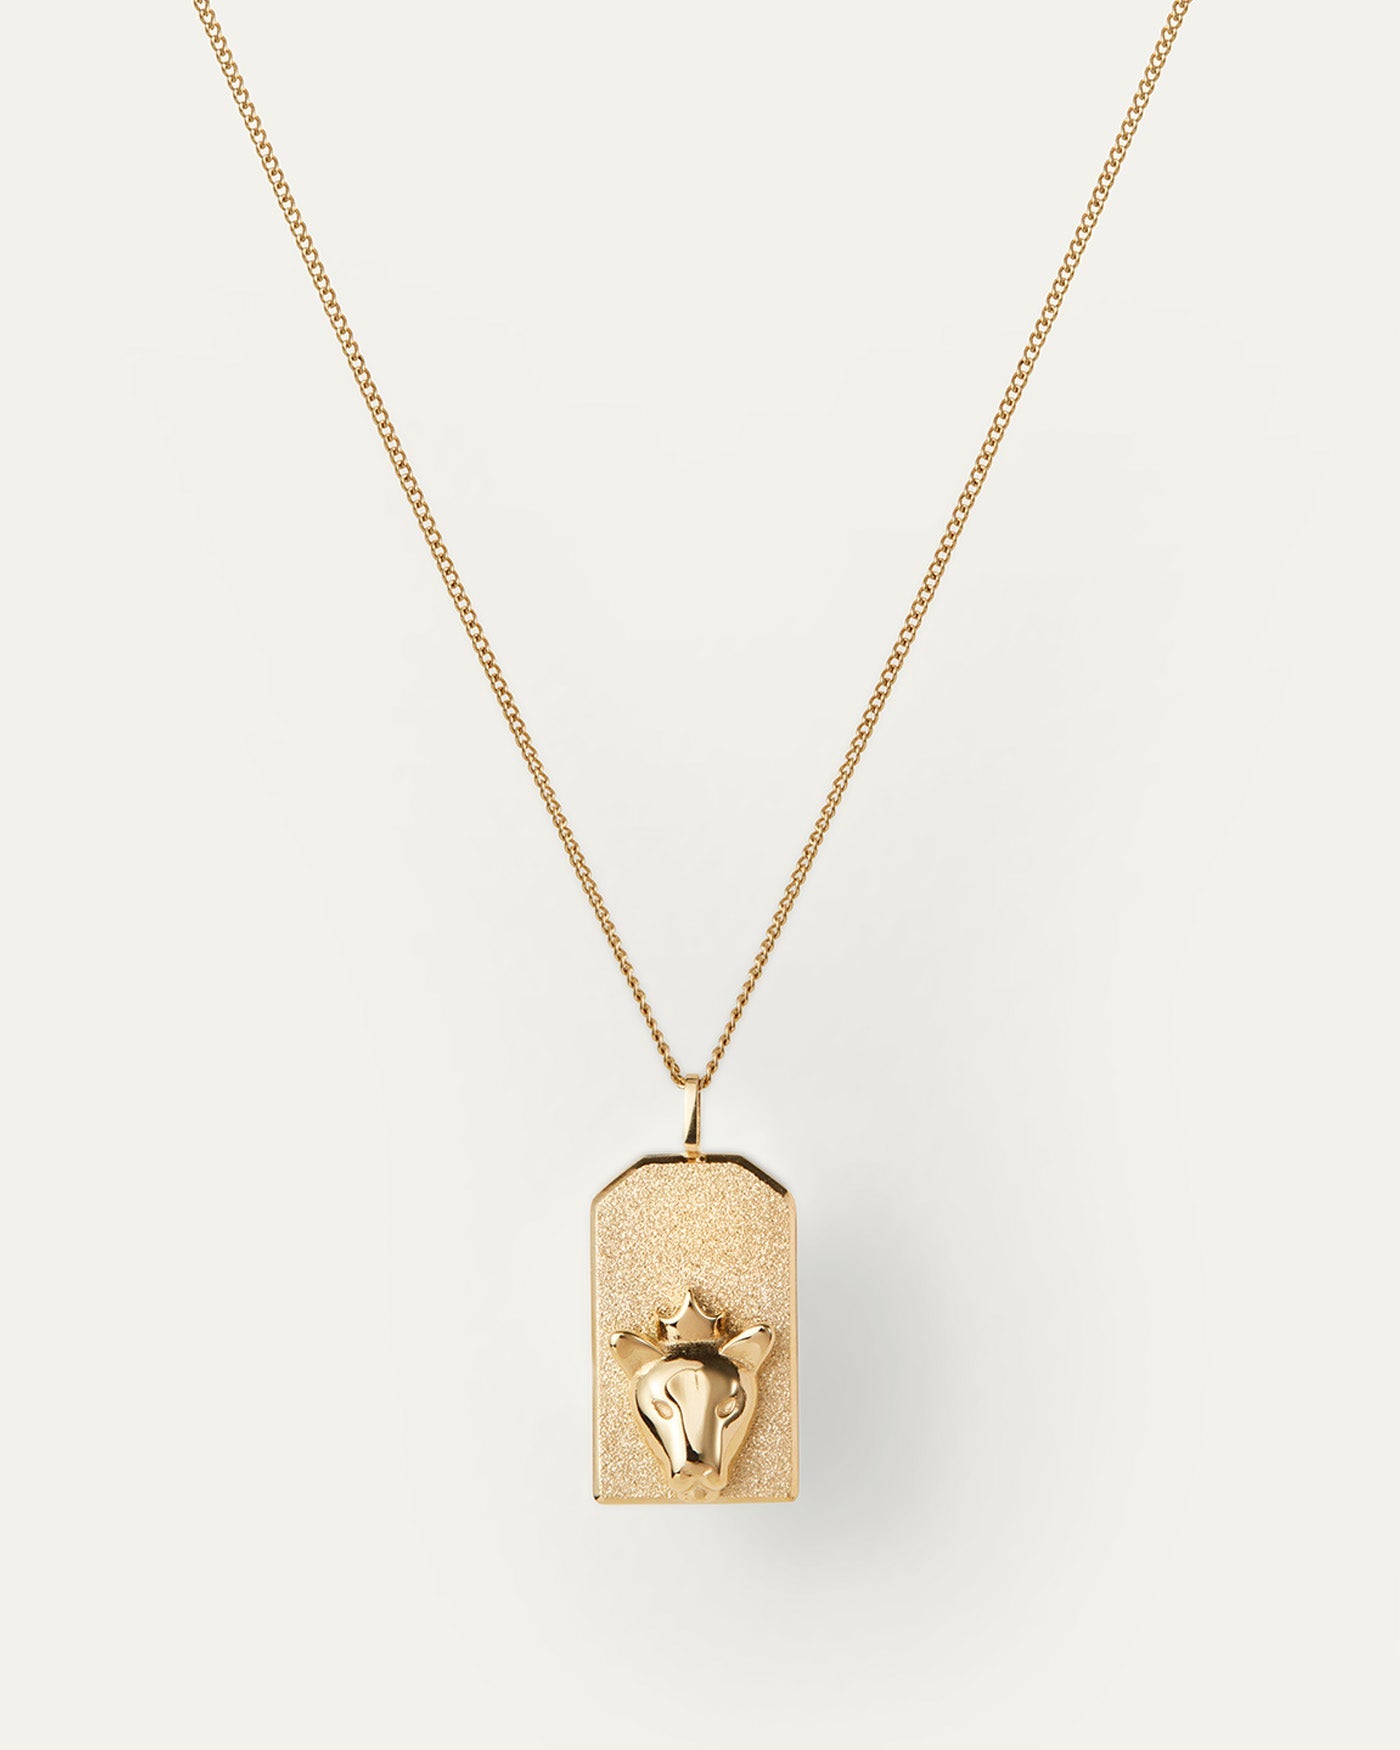 The Leo Zodiac Pendant Necklace